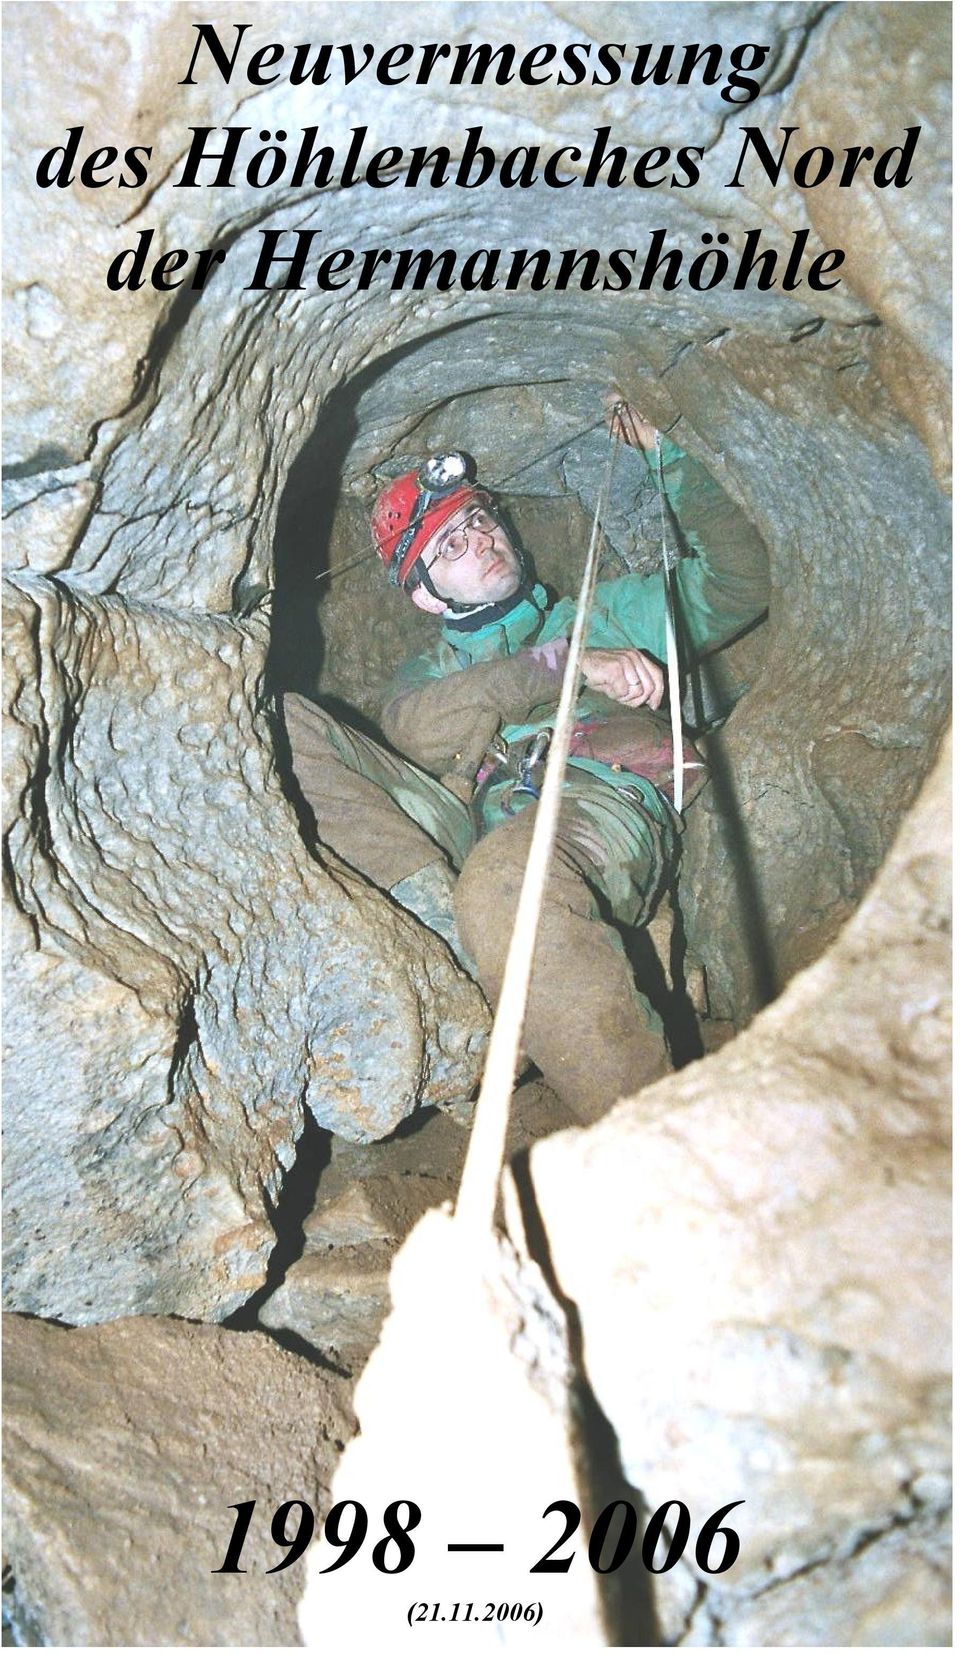 der Hermannshöhle